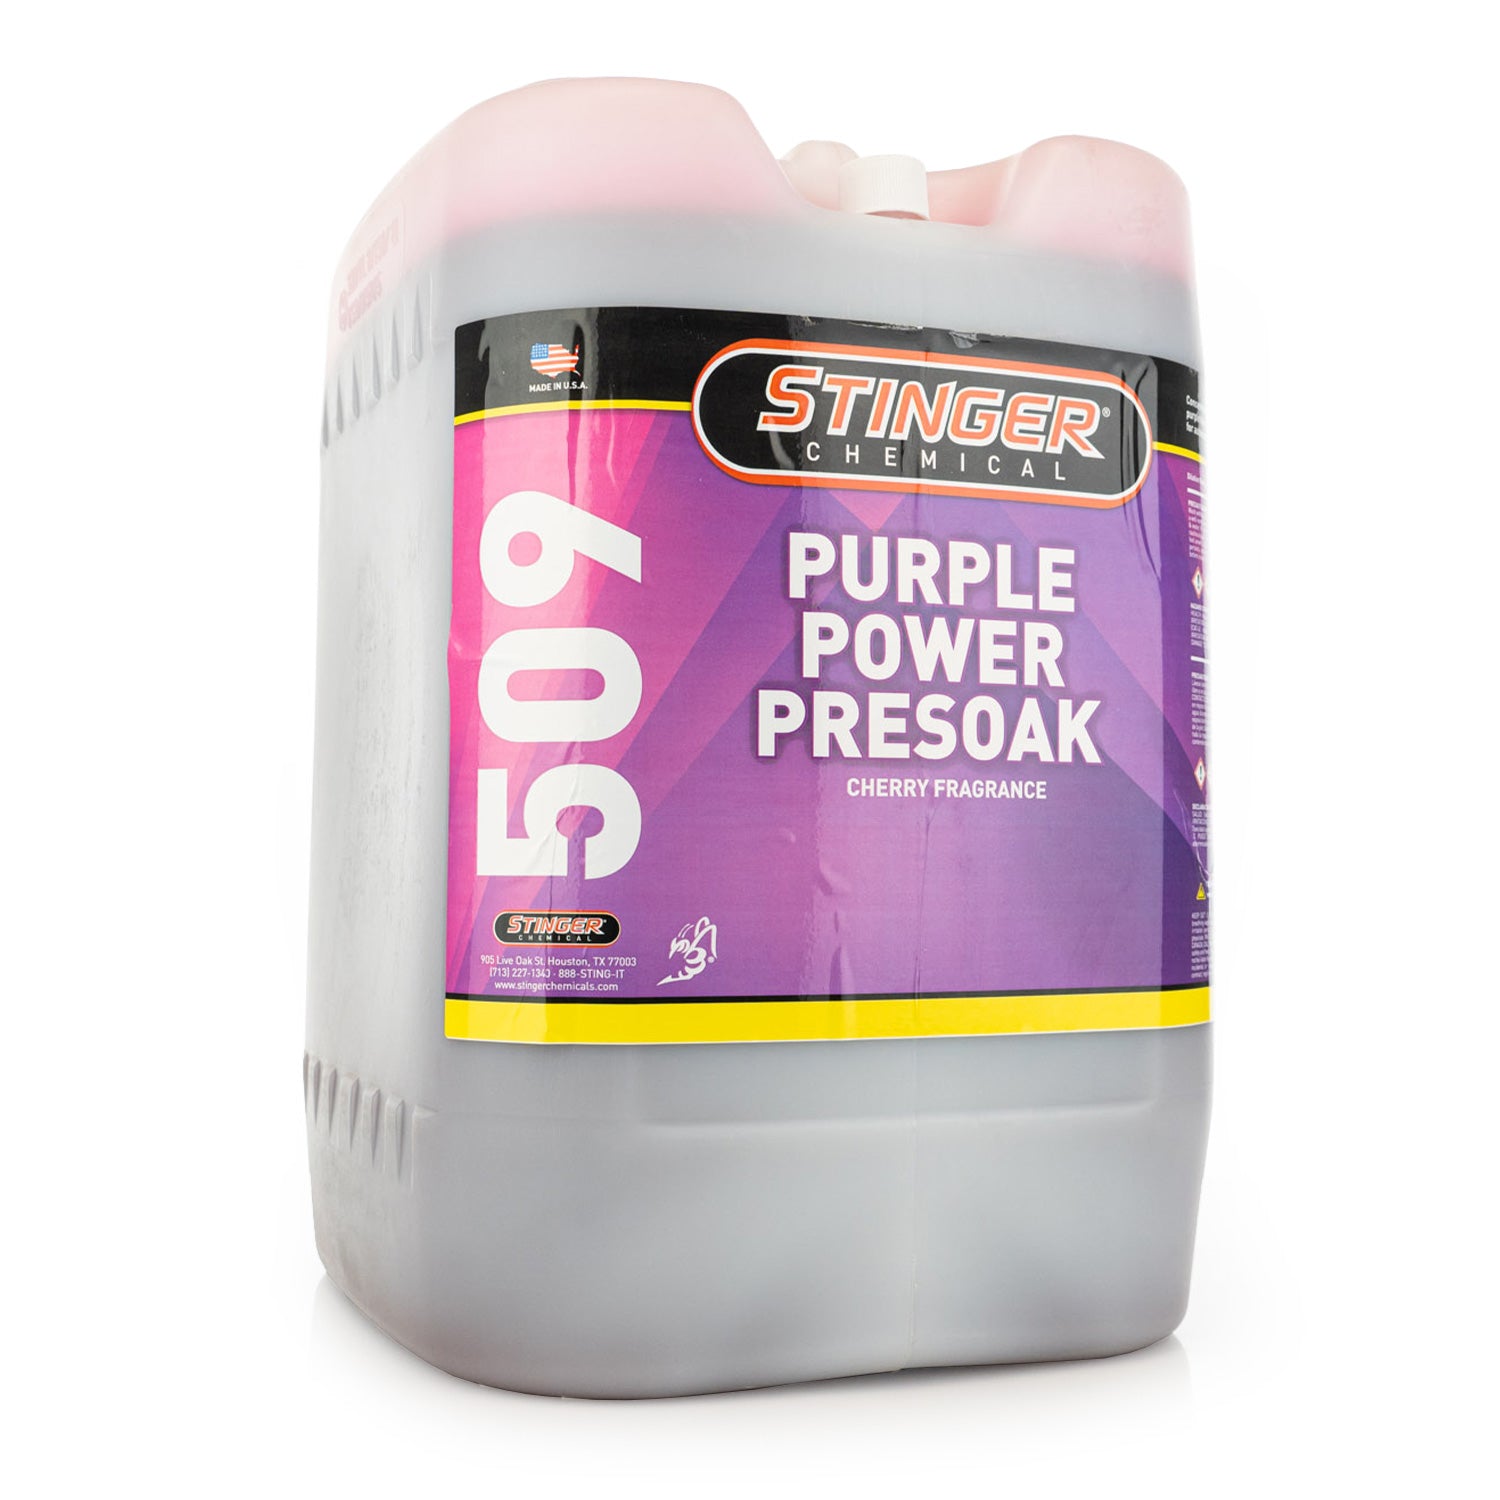 Stinger Chemical Purple Power Presoak